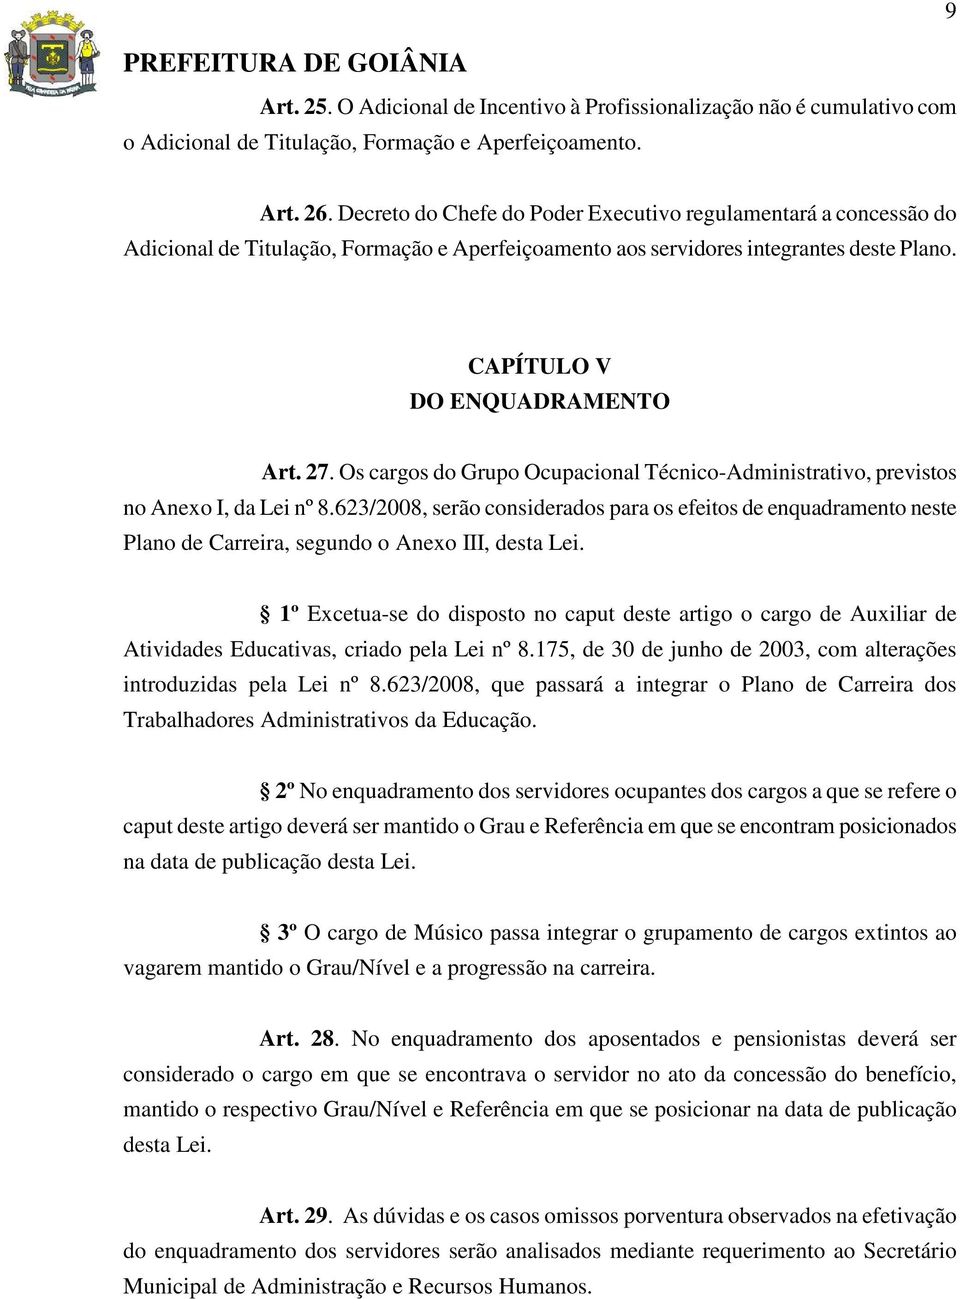 Os cargos do Grupo Ocupacional Técnico-Administrativo, previstos no Anexo I, da Lei nº 8.